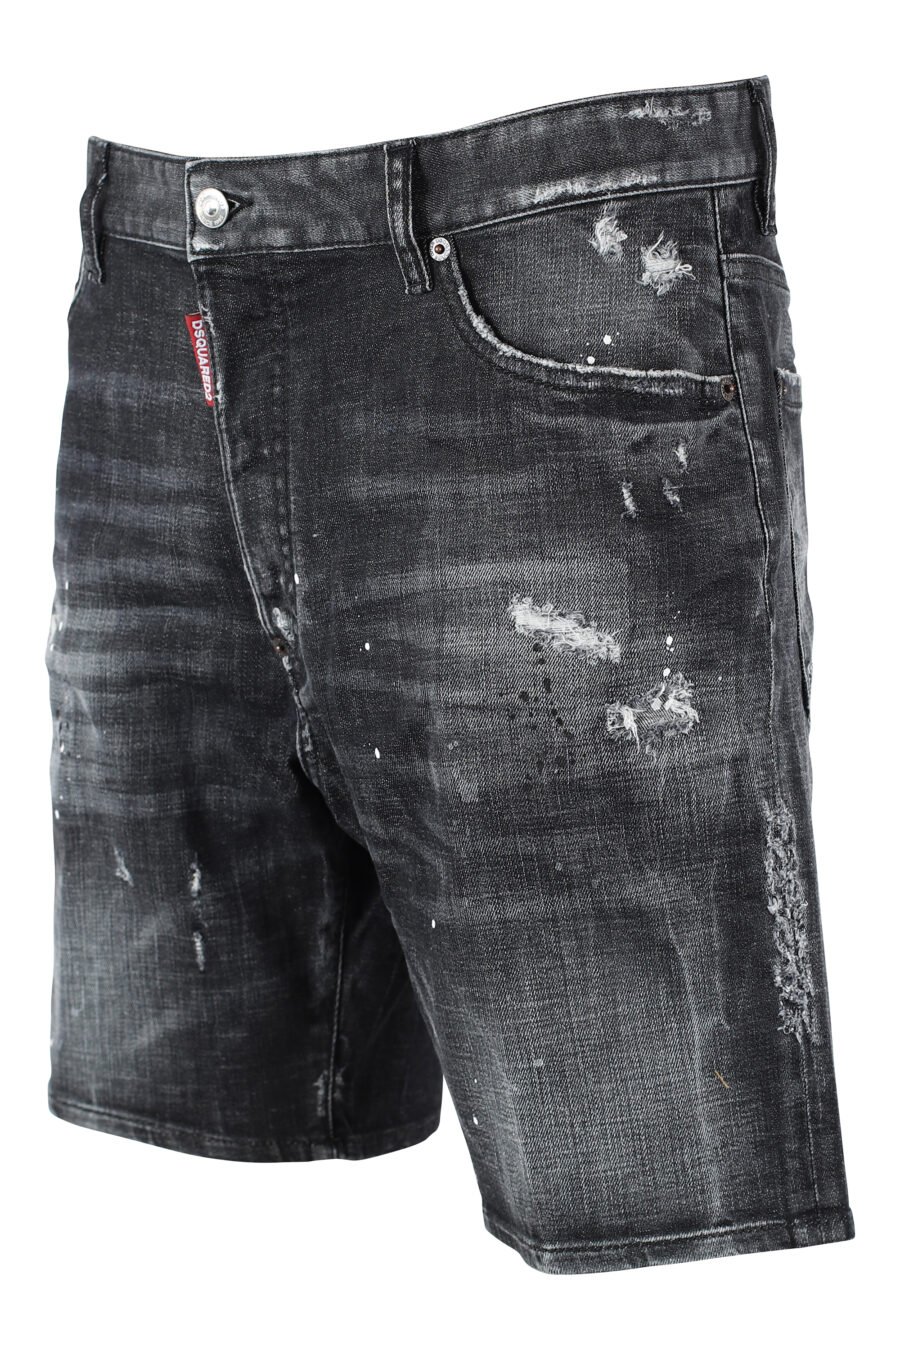 Pantalón vaquero corto "marine denim shorts" negros desgastados con rotos - IMG 9729